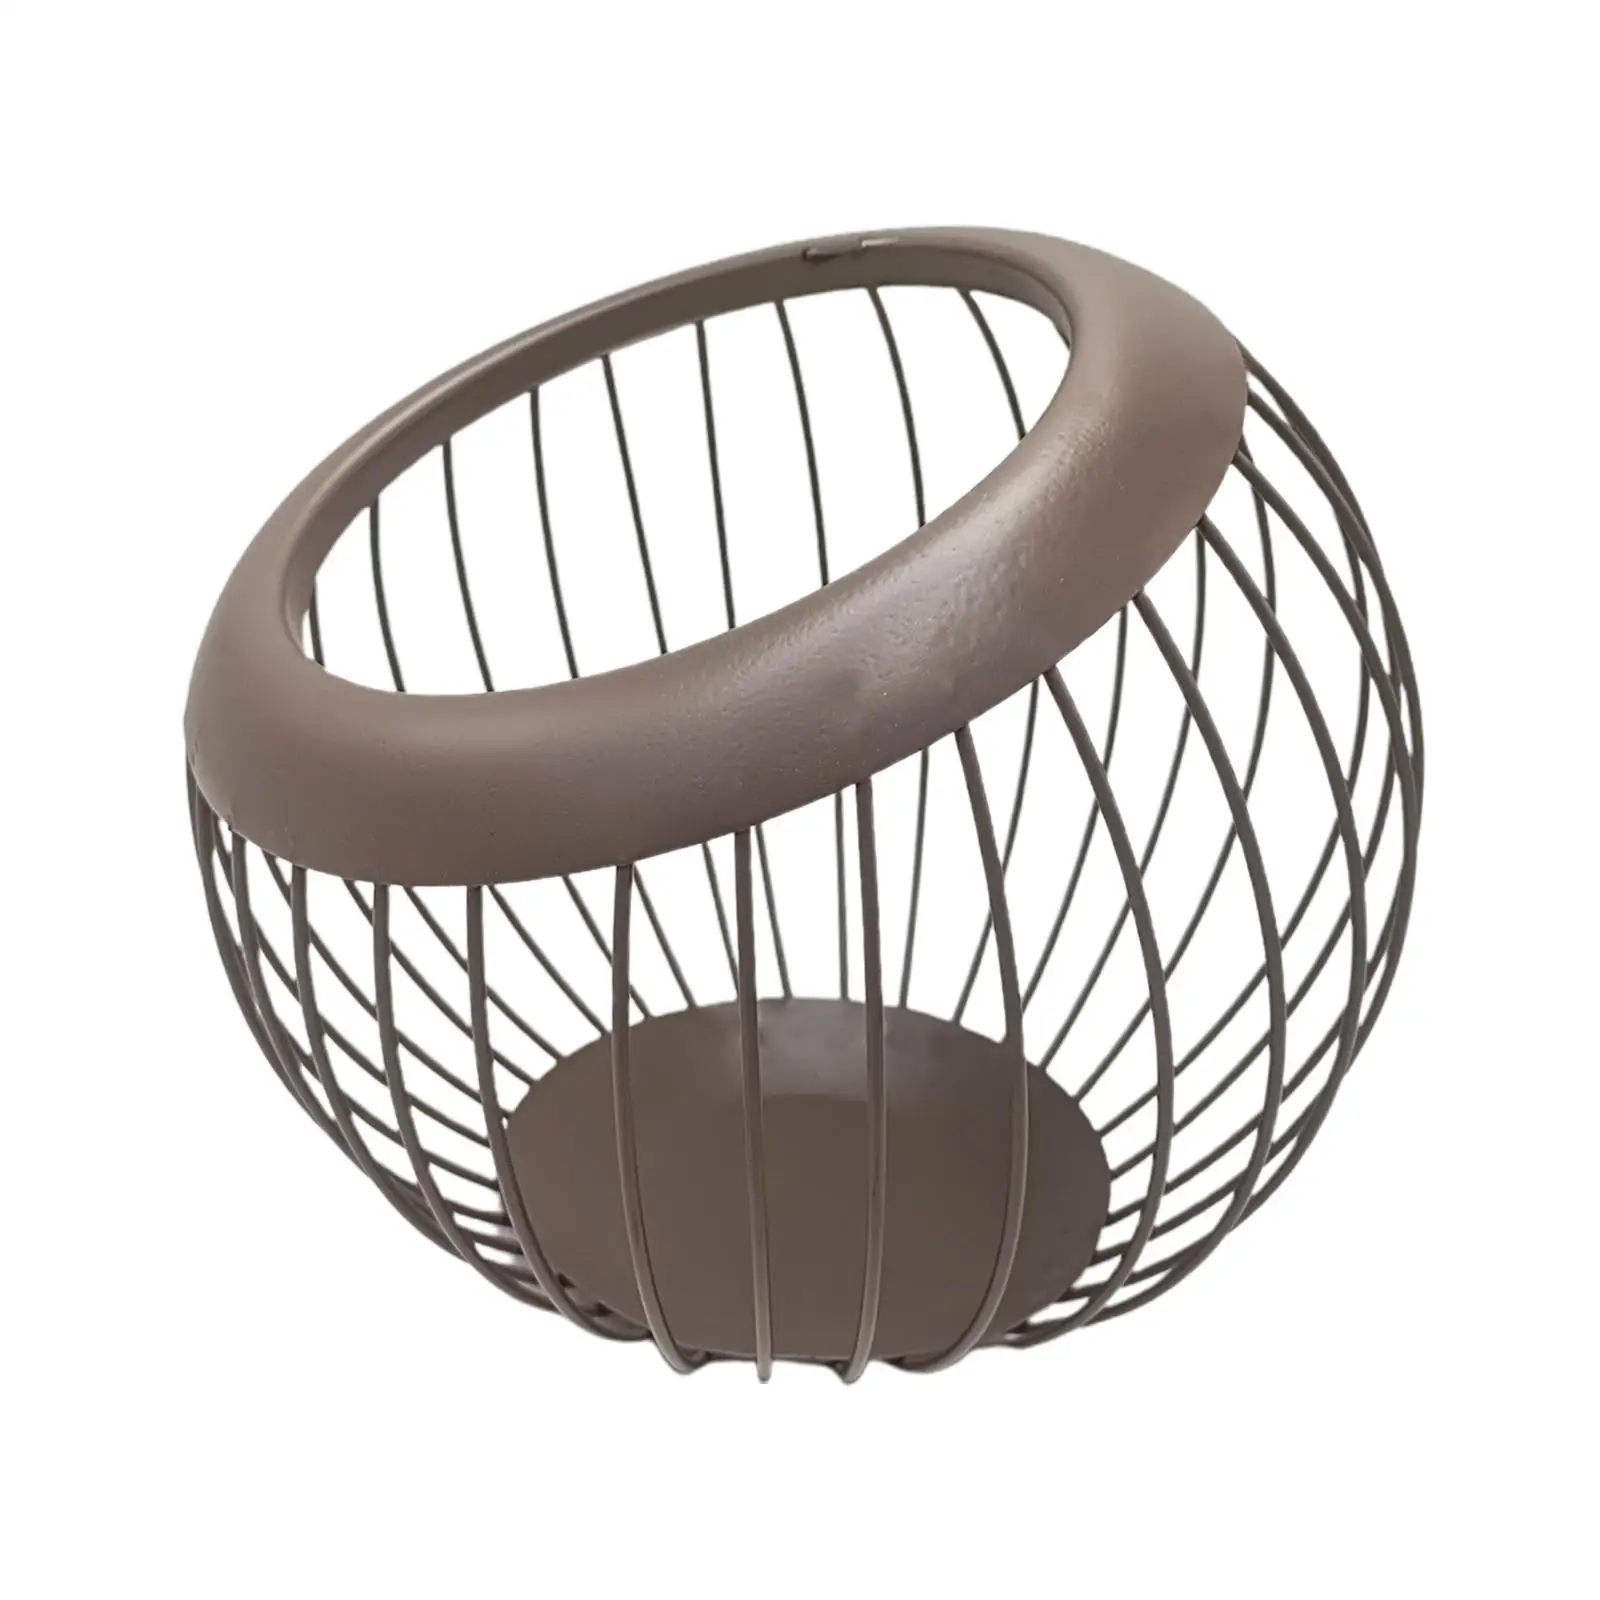 Coffee Pod Holder, Tidy Fruit Storage Basket, for Organization Offices Cafe